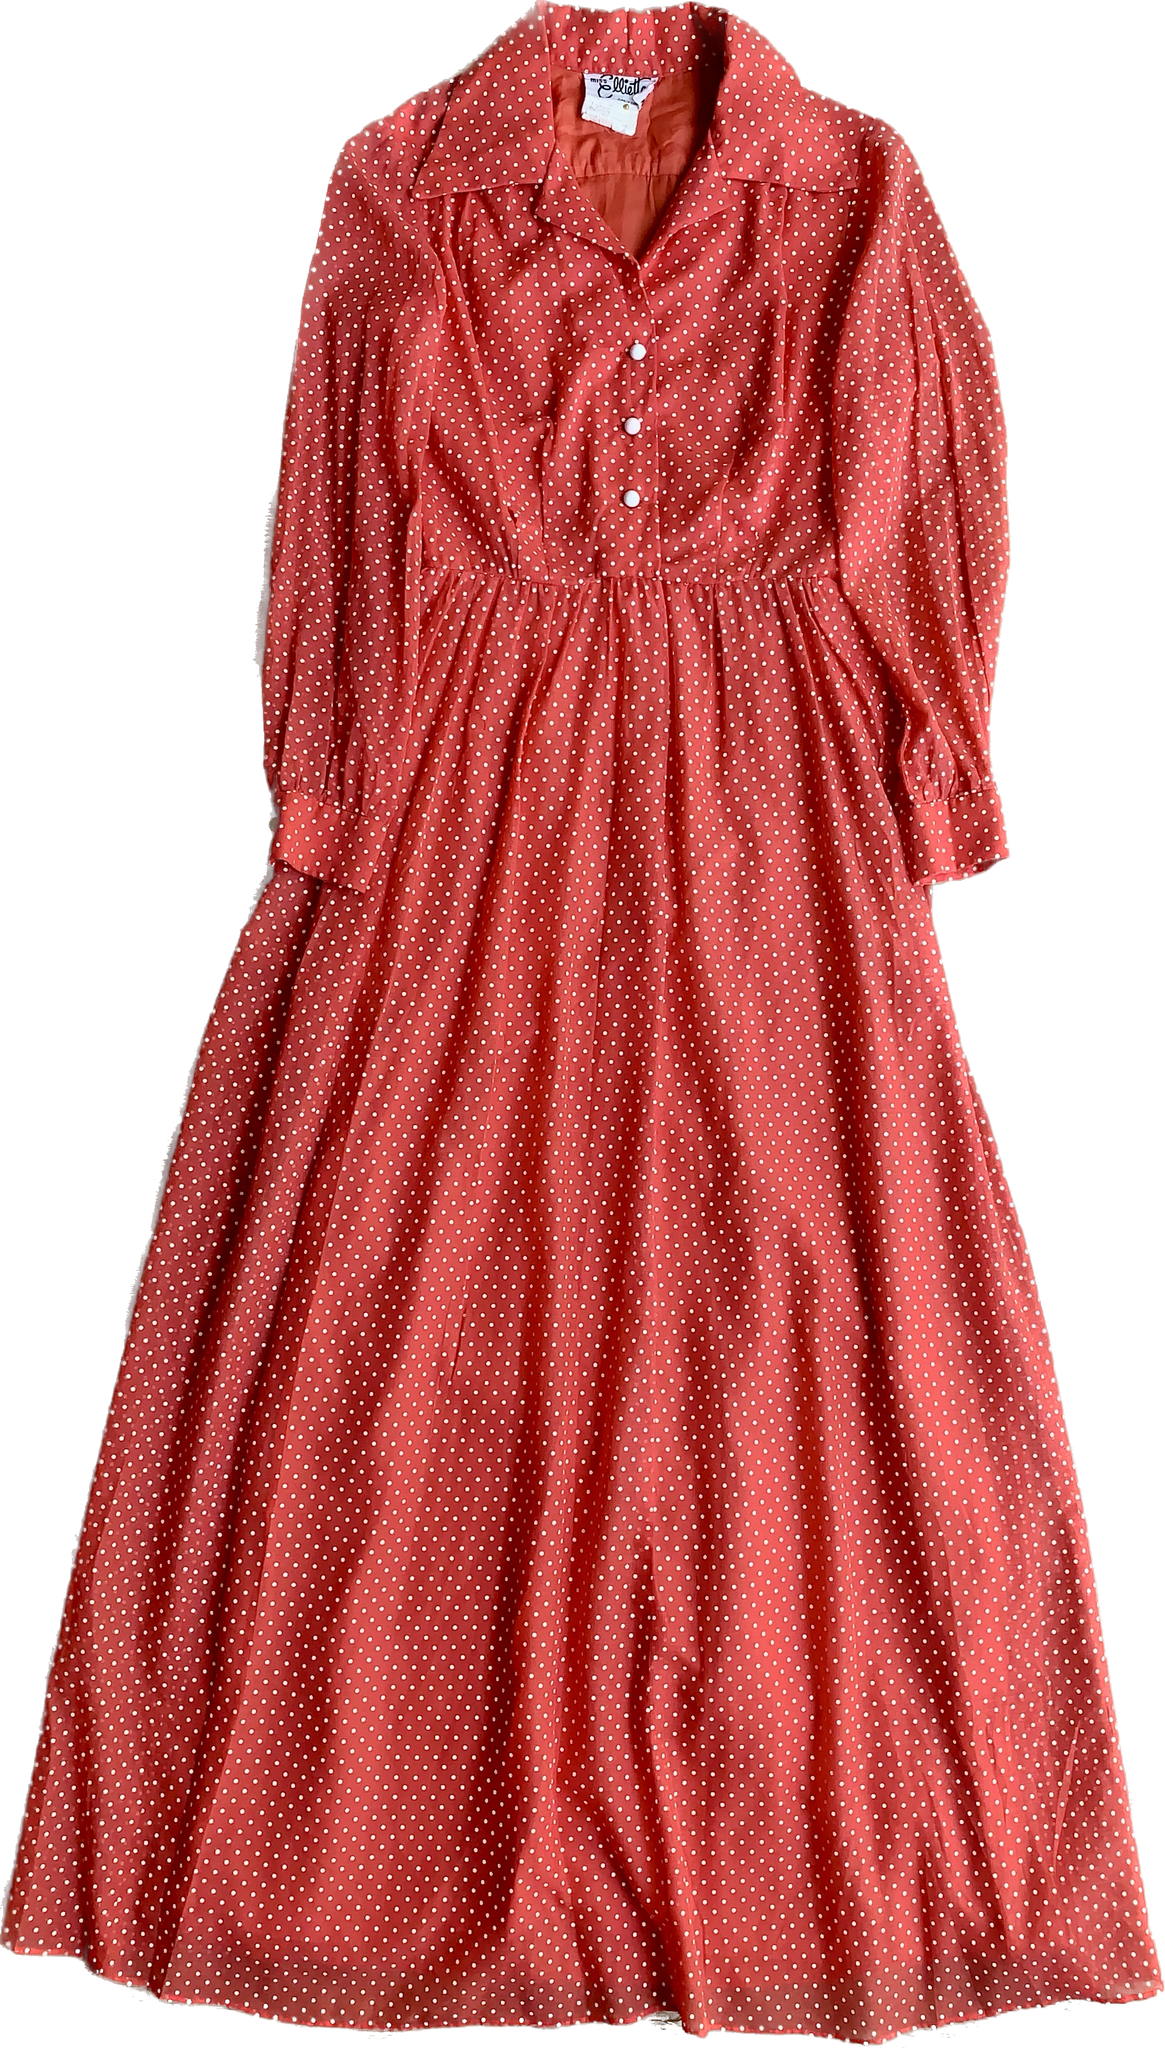 70s Miss Elliette Red/White Dot Maxi Dress         w26